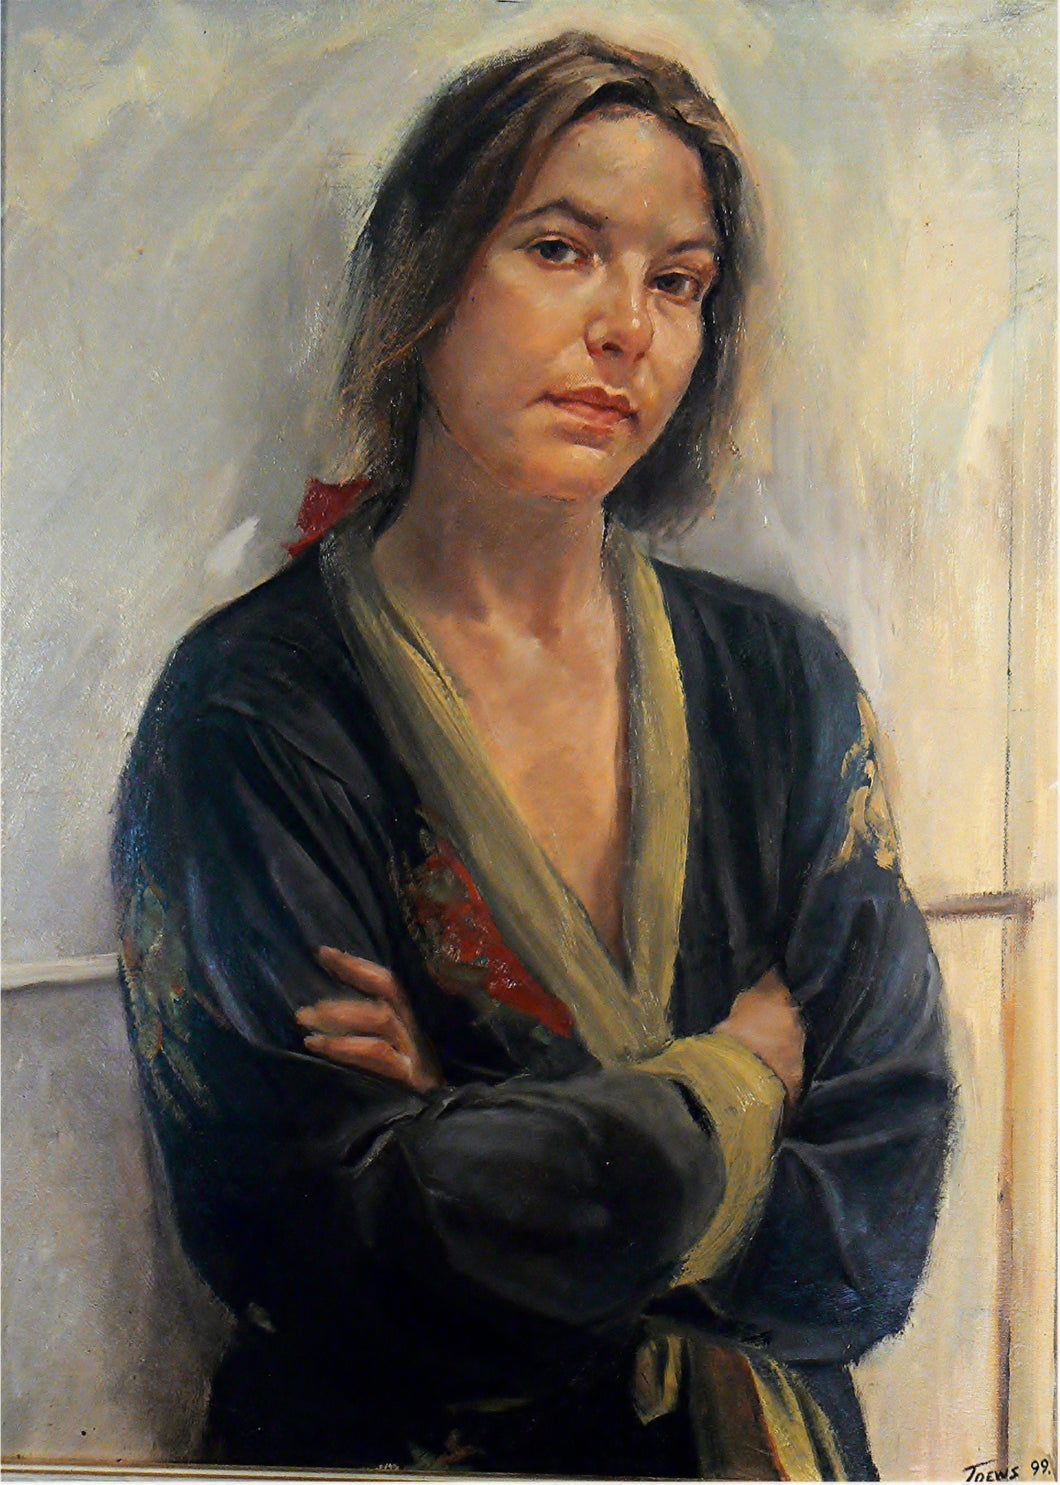 Portrait of a Woman in a Black Robe